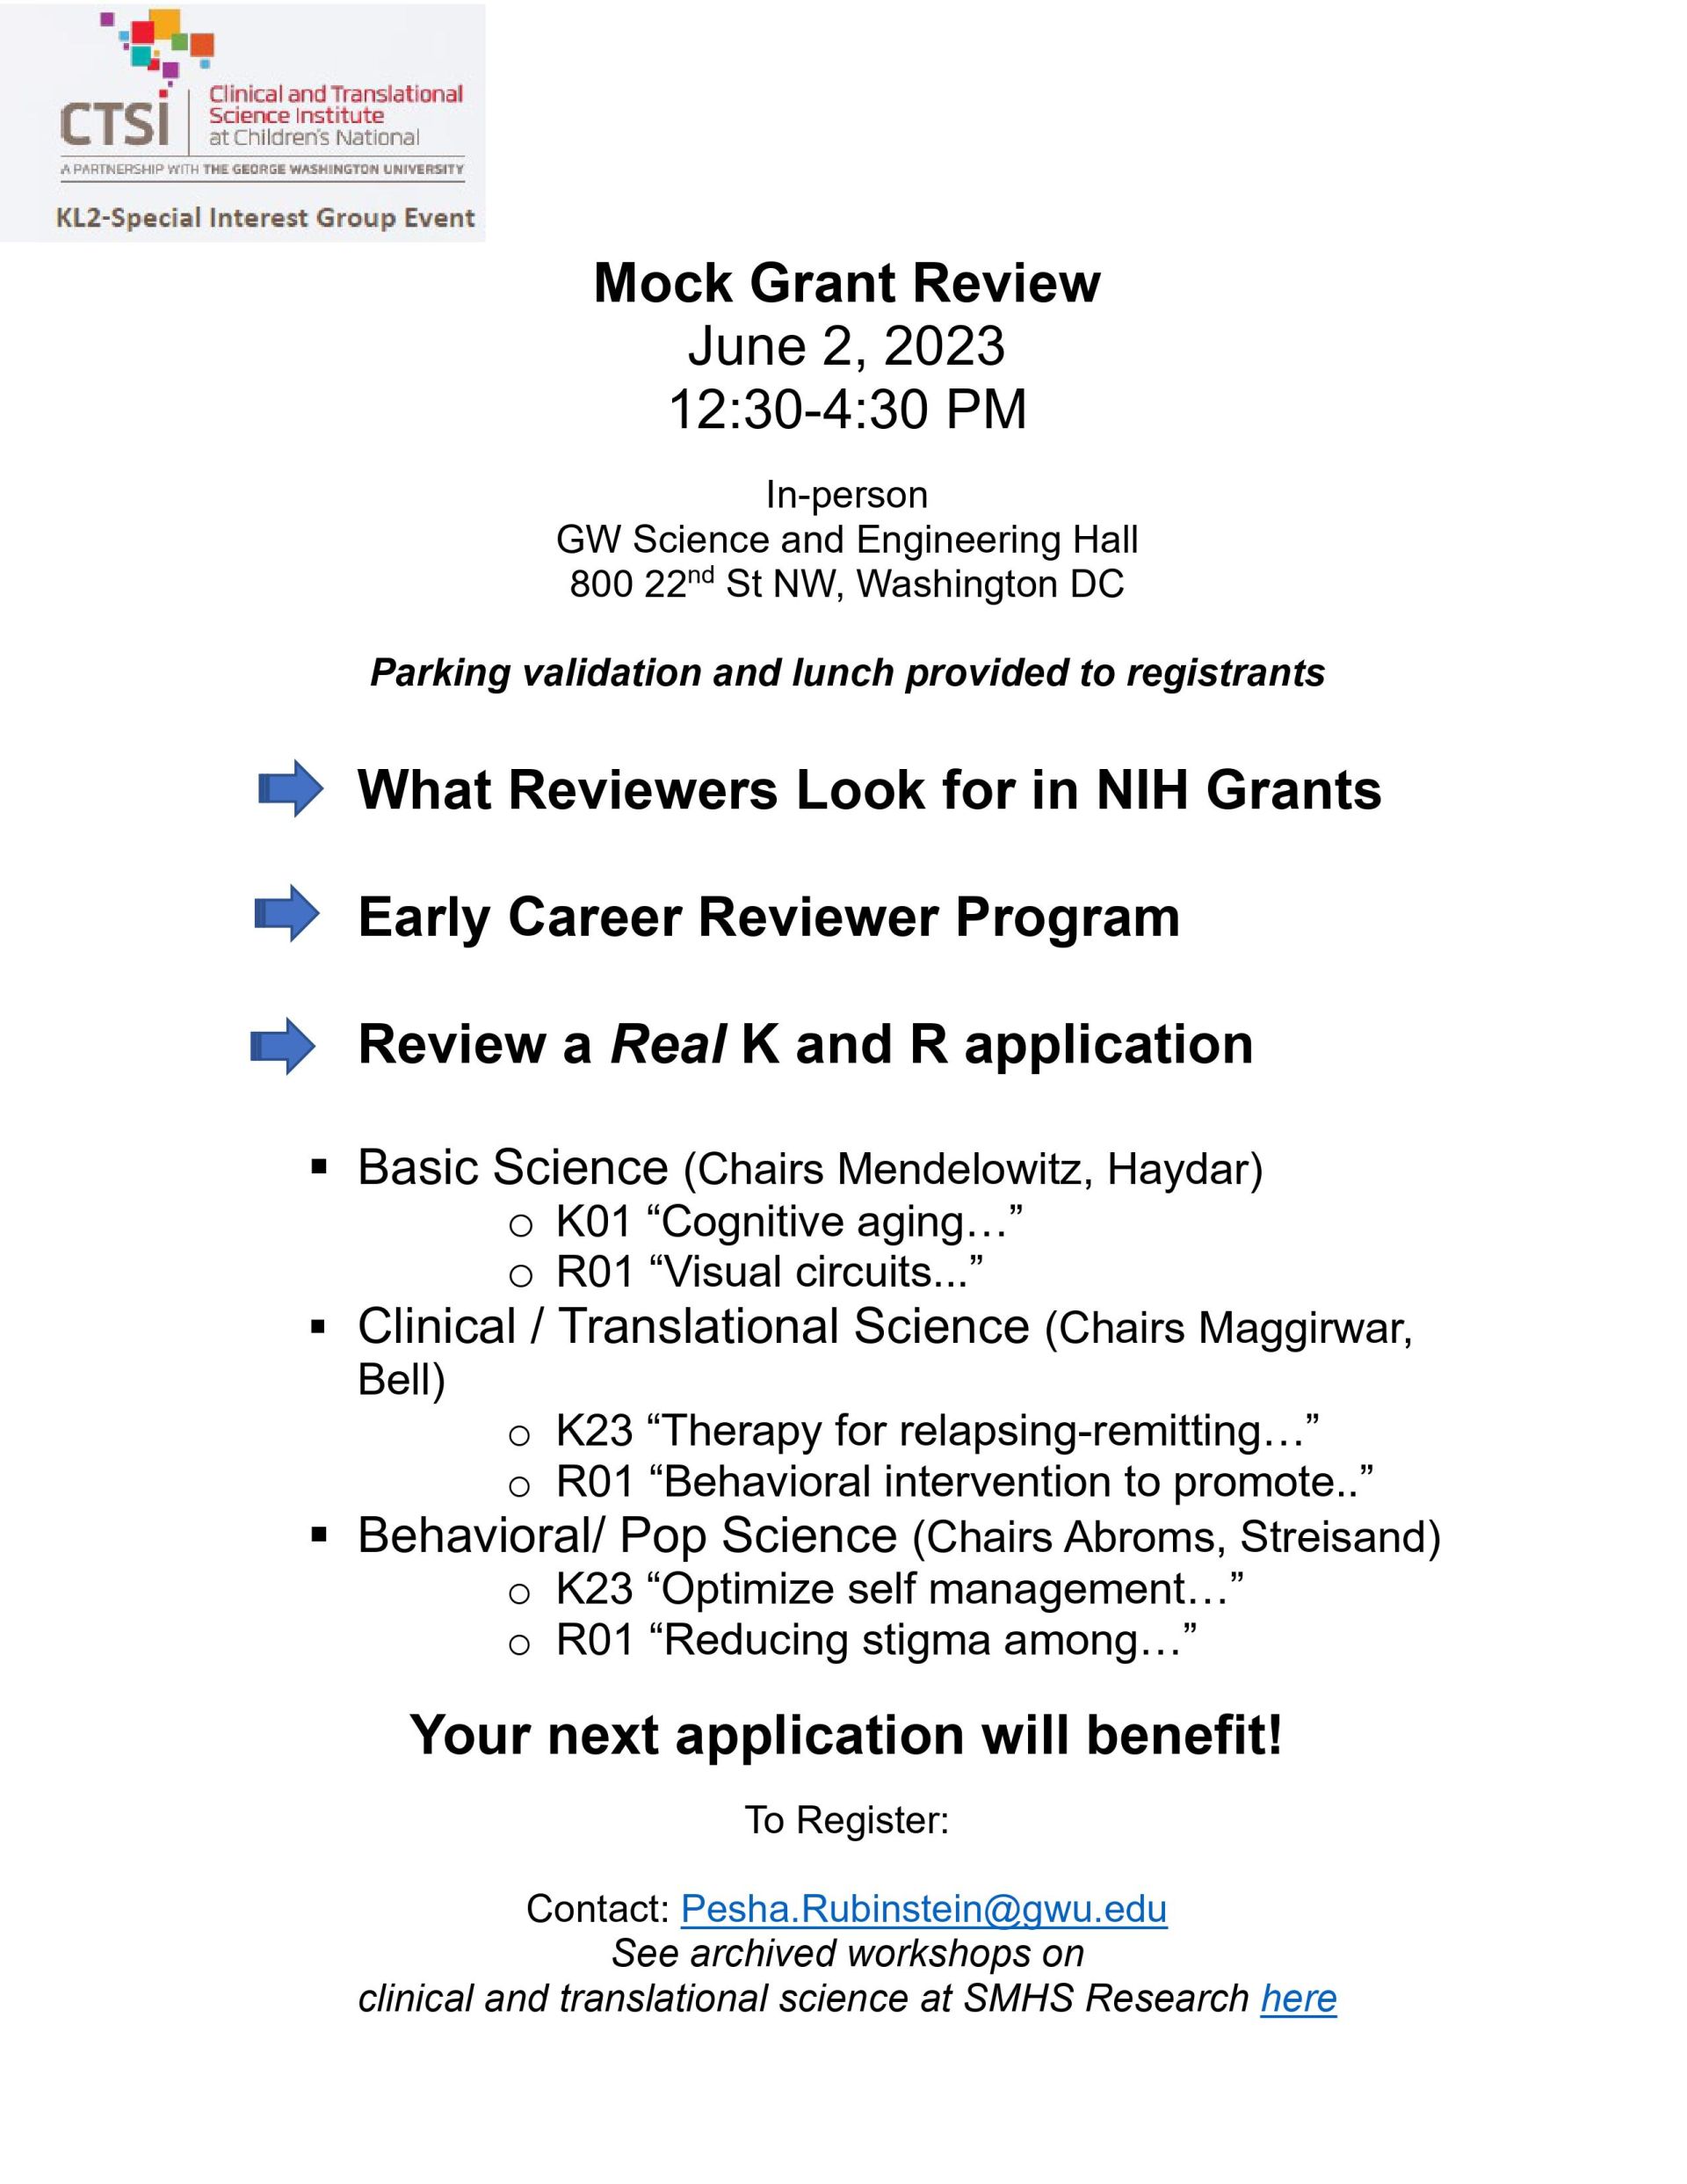 Mock Grant review flyer